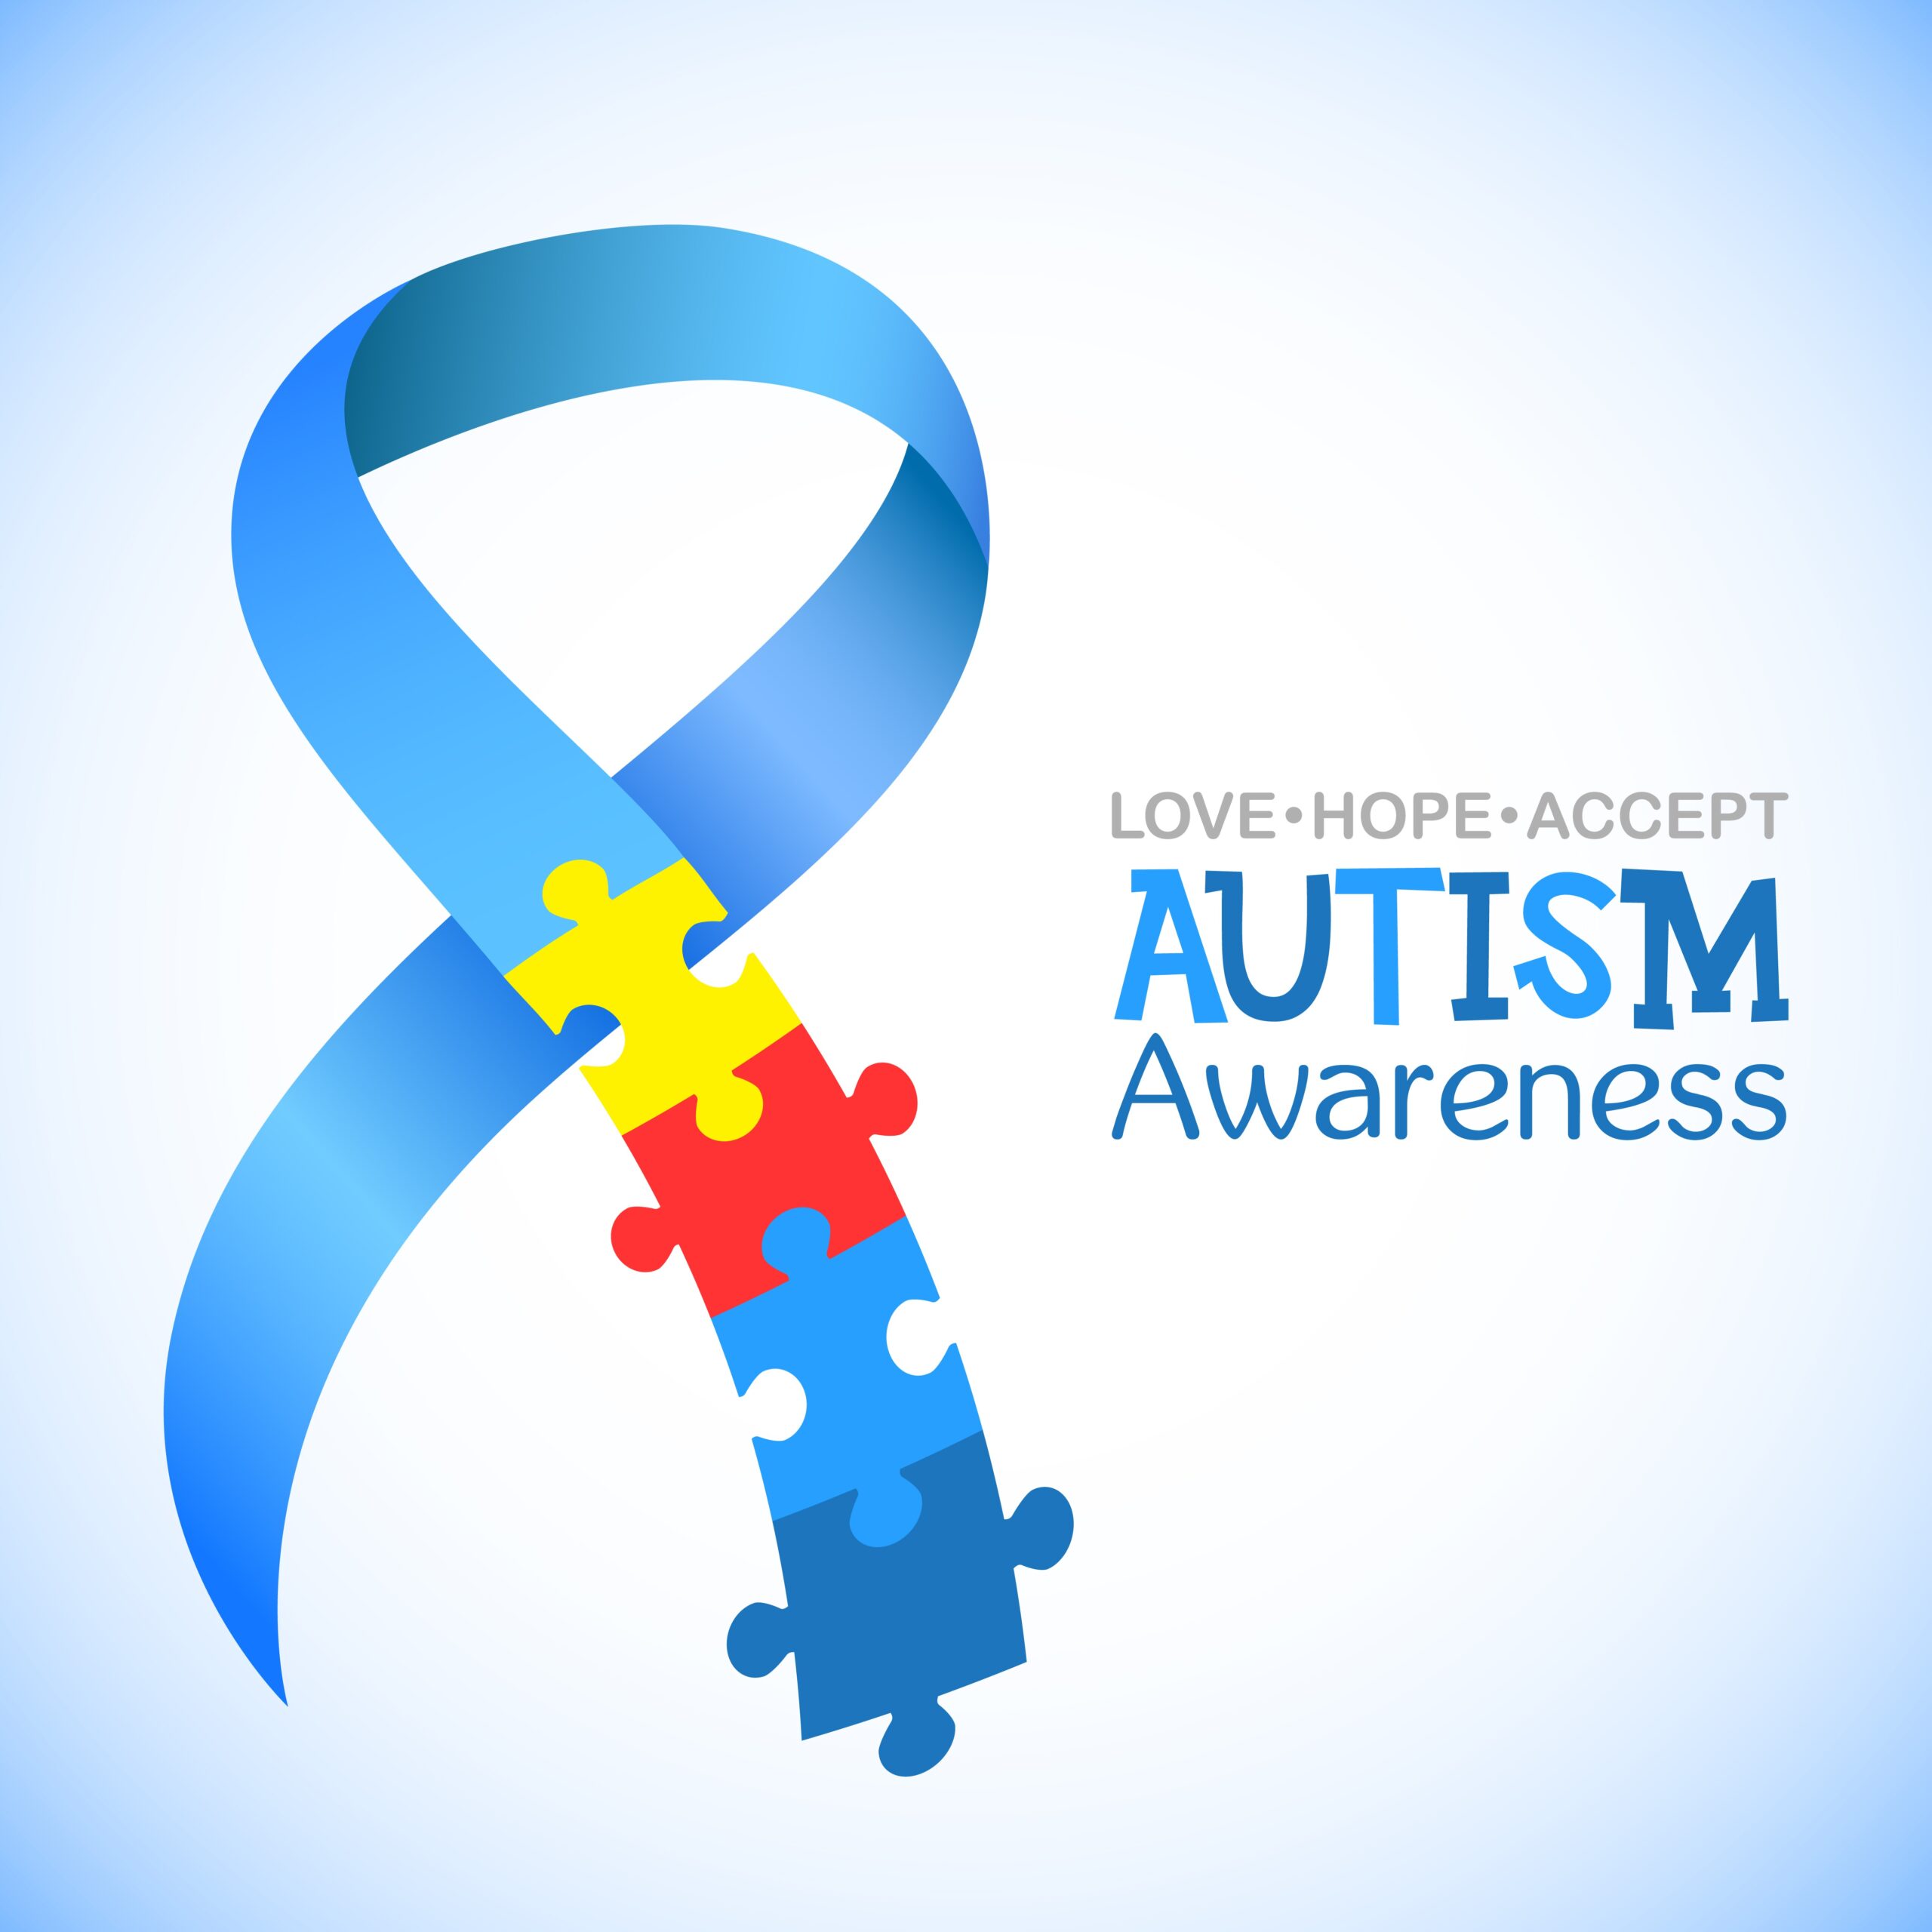 Hope Trust Light it up blue! April is Autism Awareness Month Hope Trust